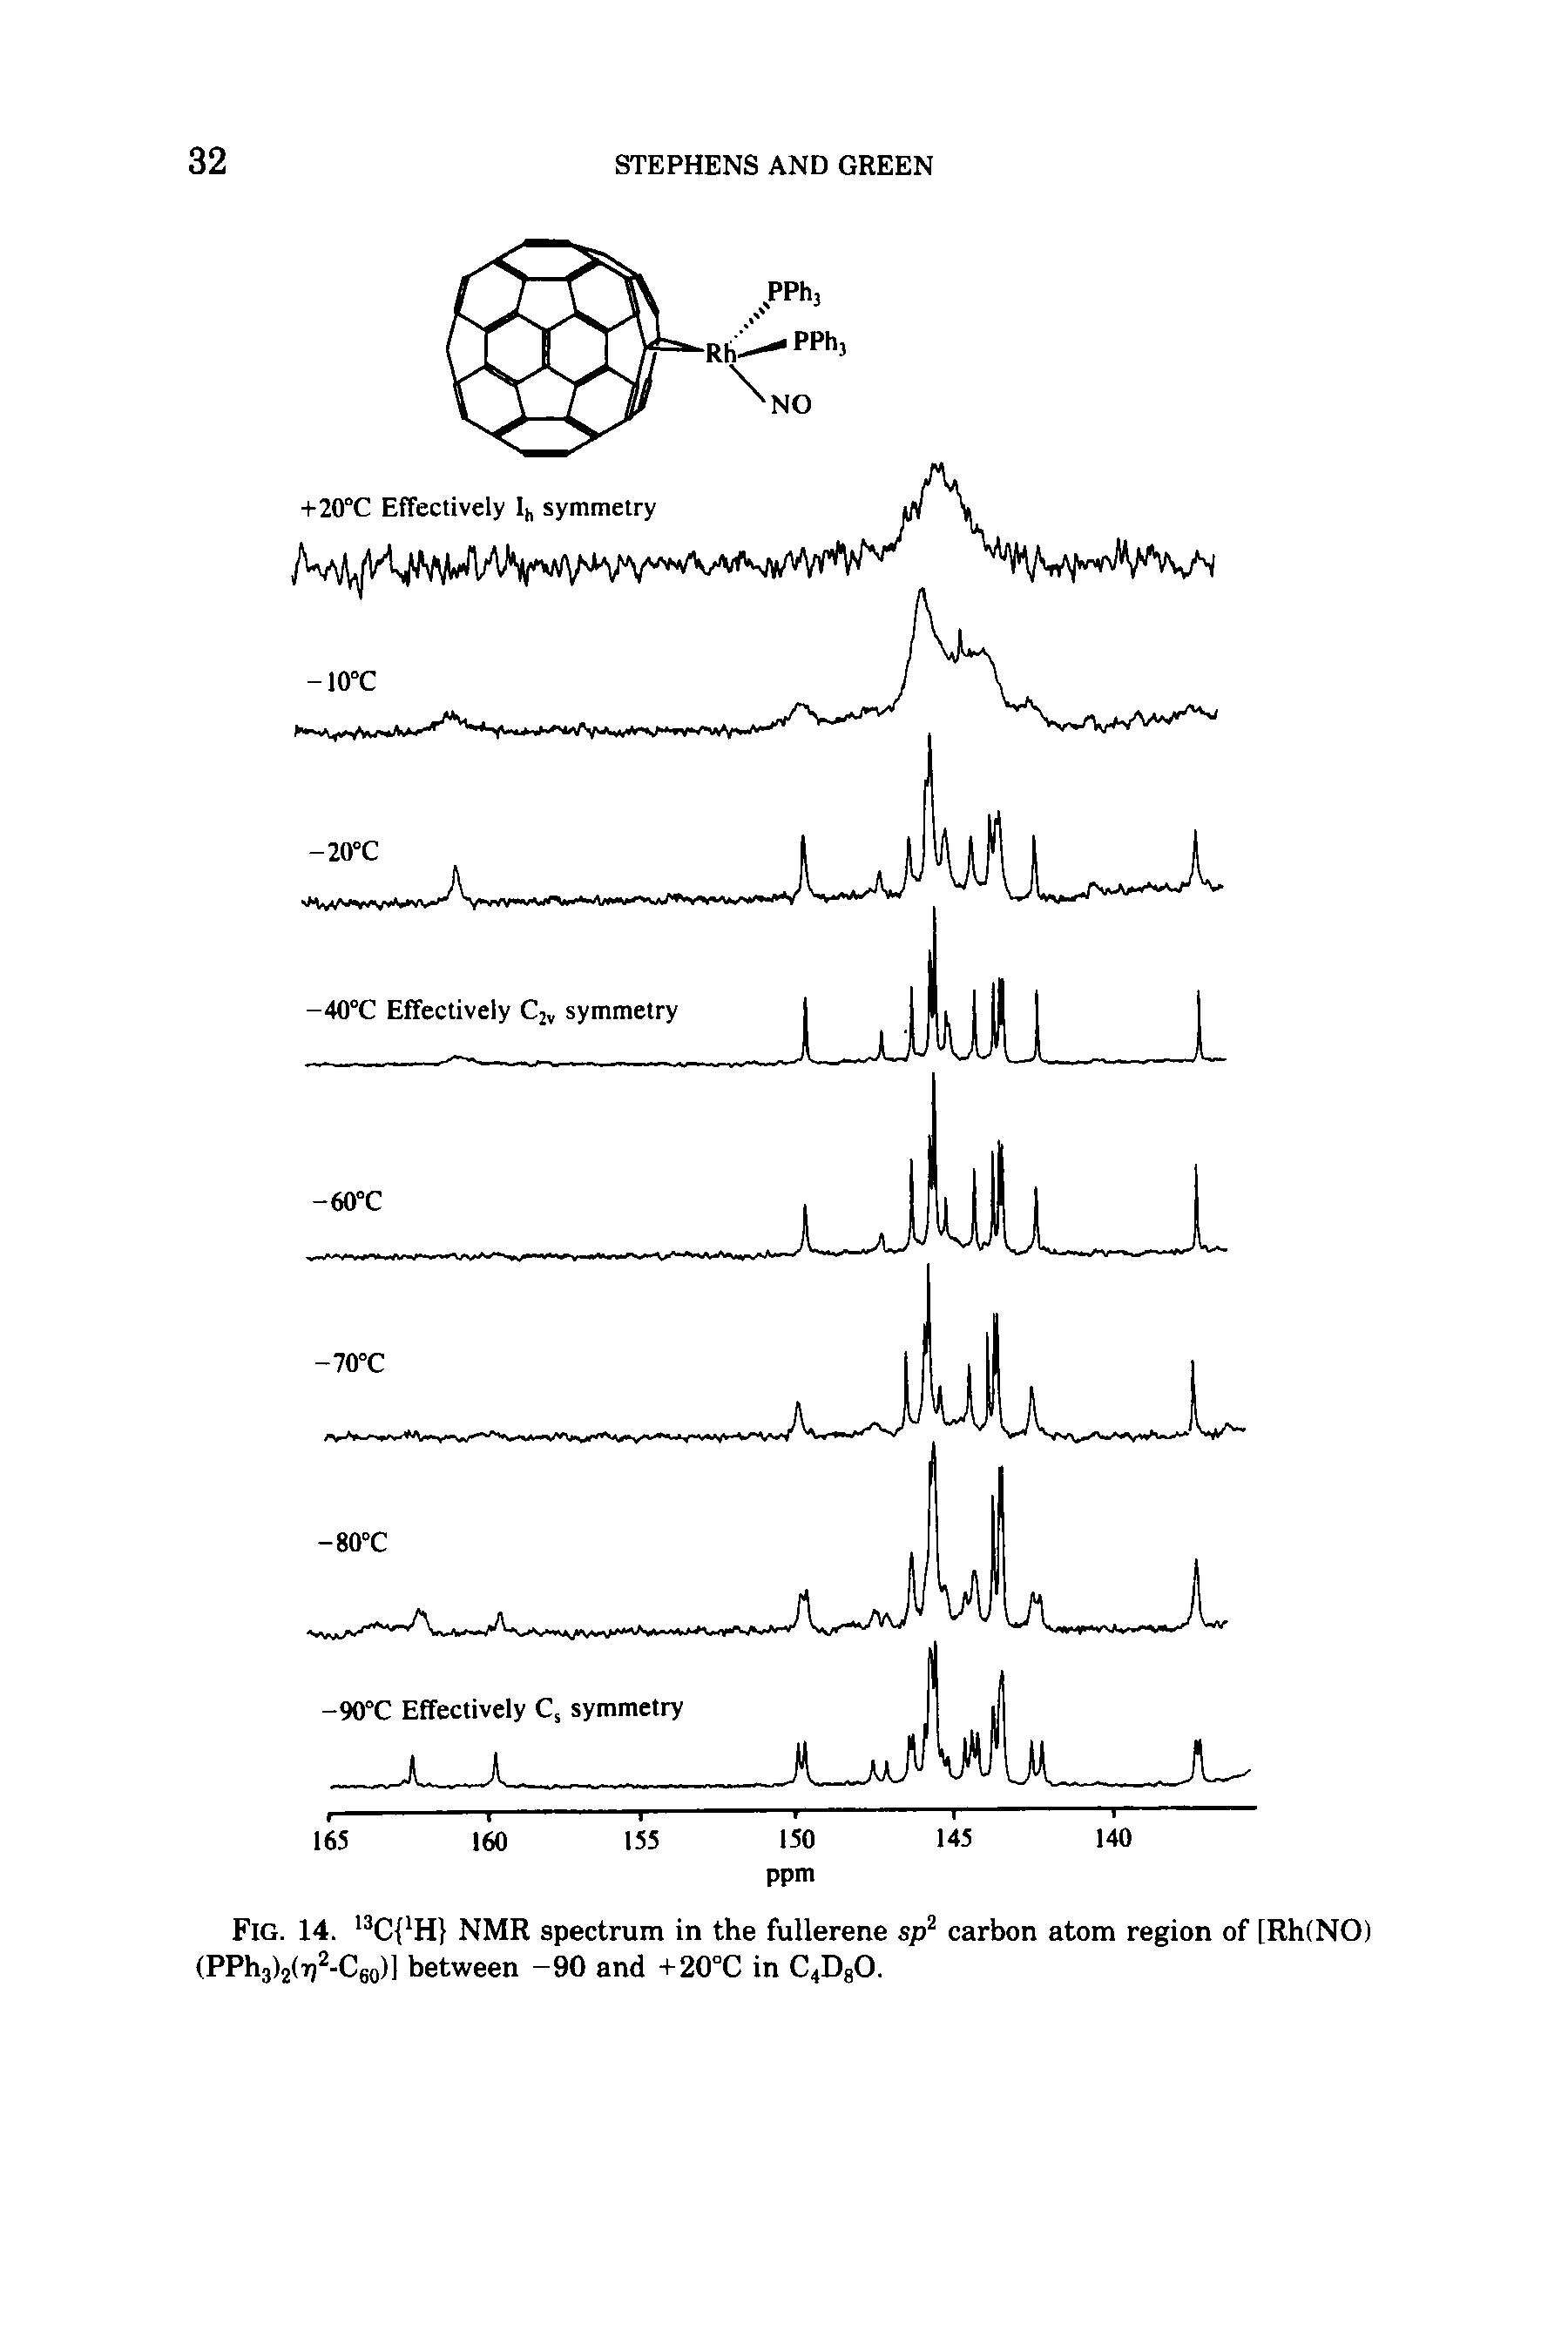 Fig. 14. 13 NMR spectrum in the fullerene sp2 carbon atom region of [Rh(NO) (PPh3)2(7)2-C60)] between -90 and +20°C in C4D80.